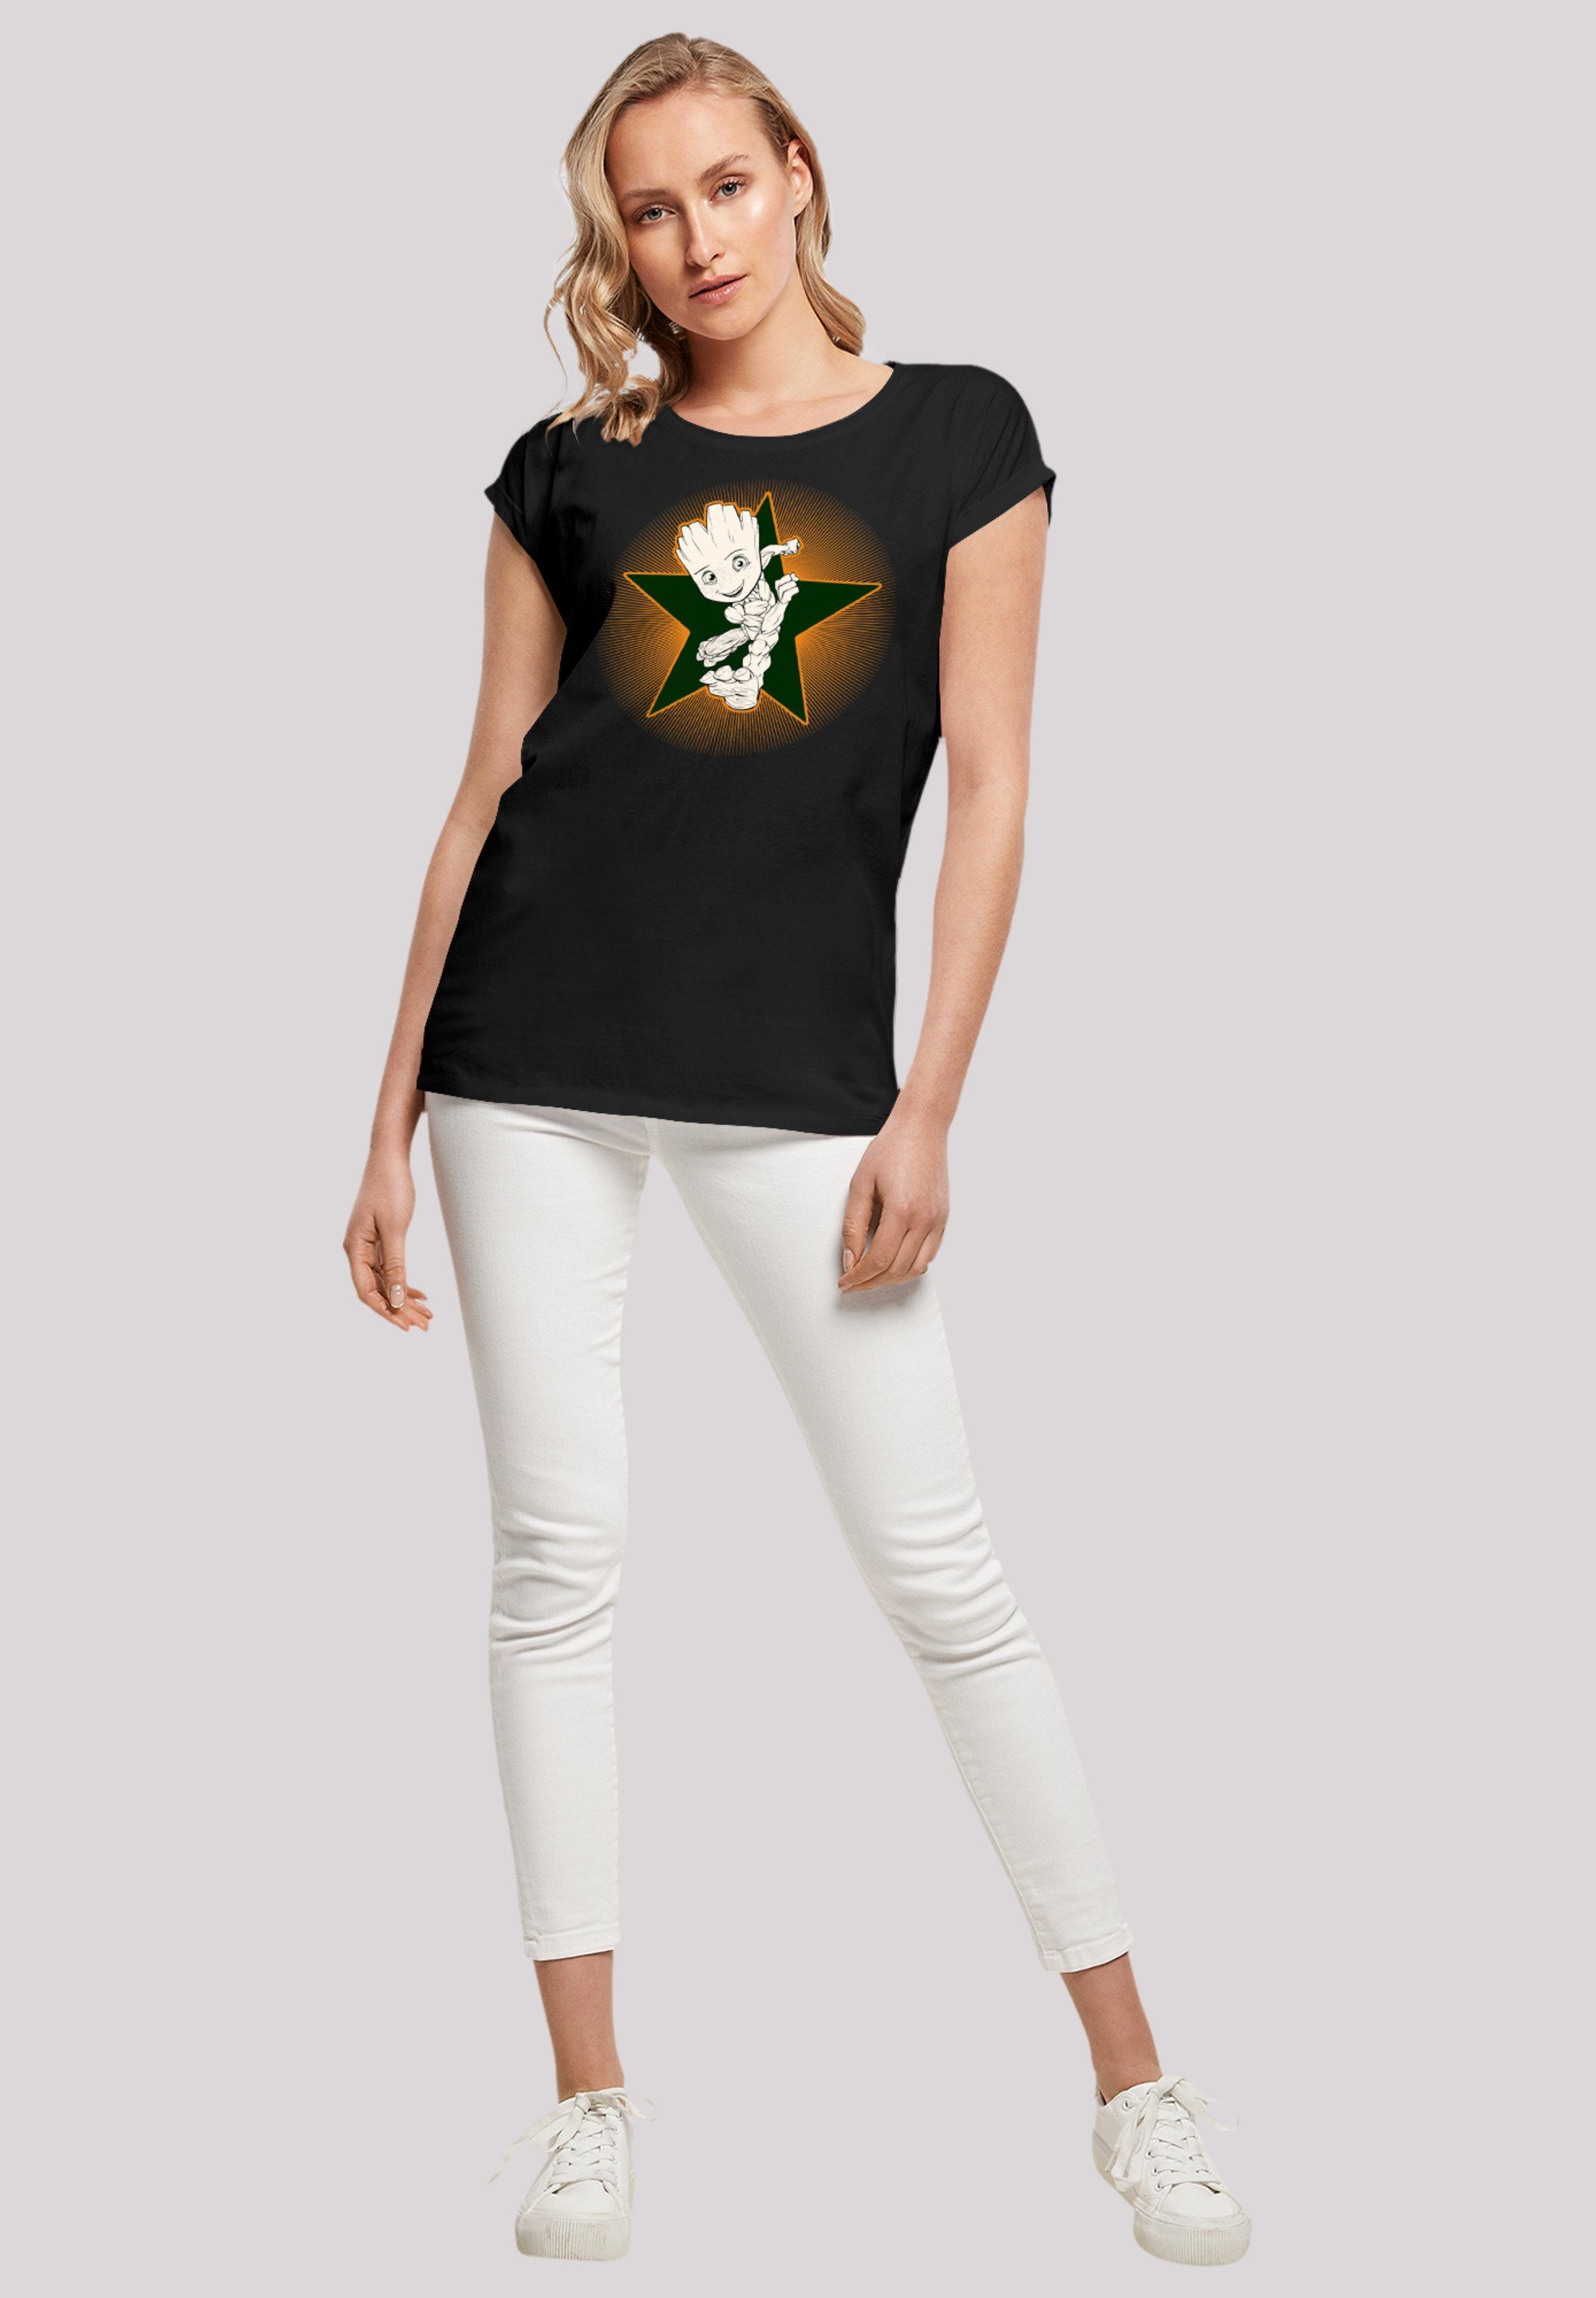 F4NT4STIC T-Shirt Marvel Guardians Groot Qualität Star Galaxy Premium The Of